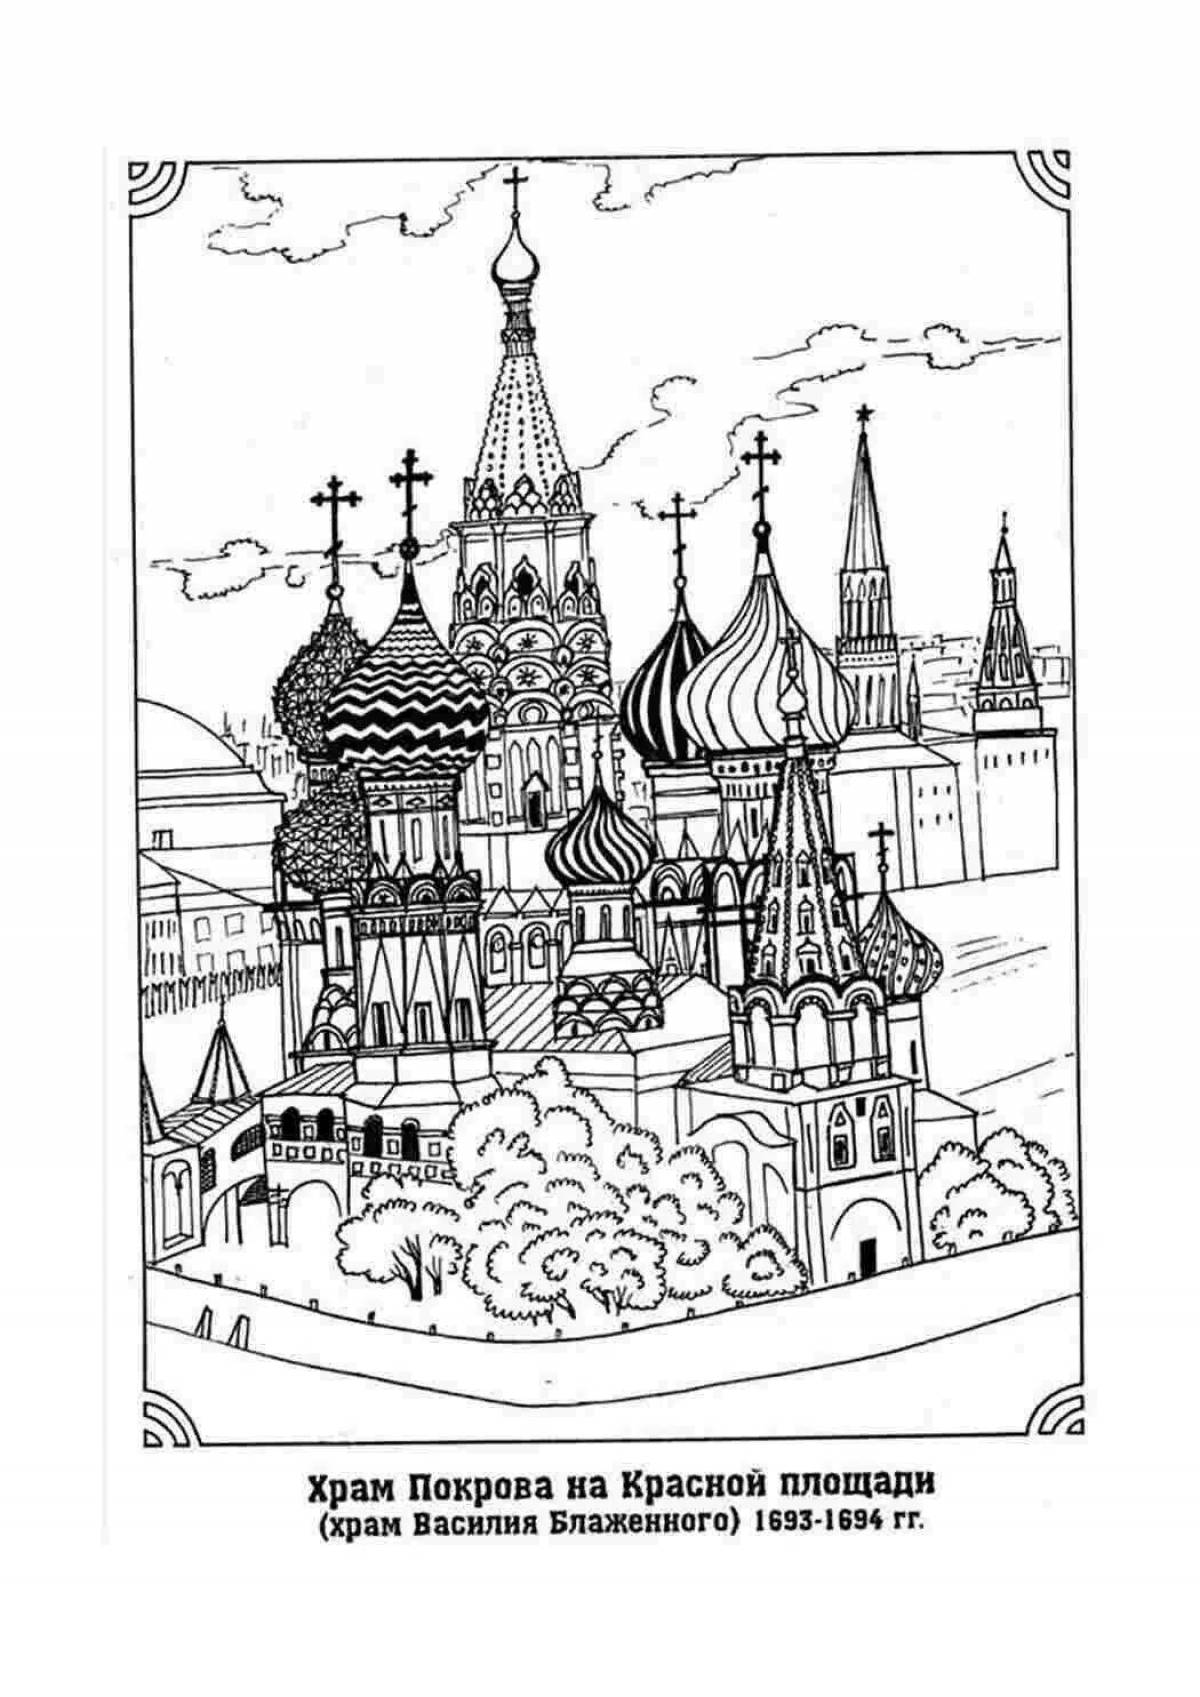 Playful drawing of the Kremlin for children